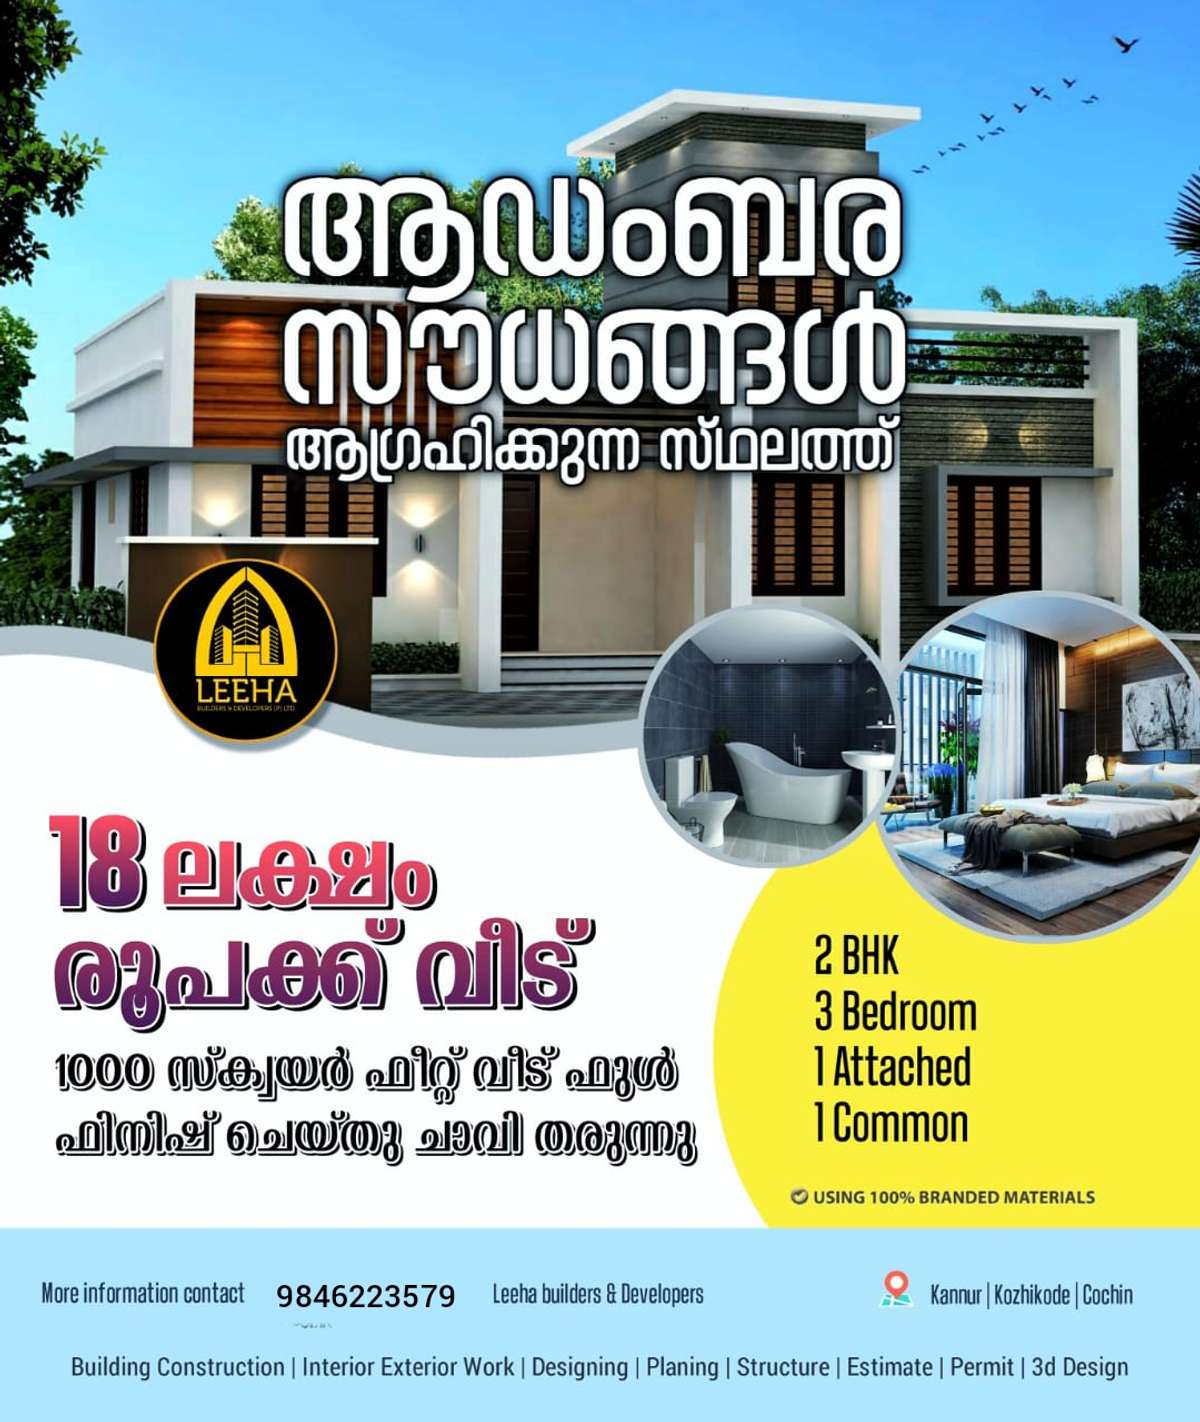 Designs by Contractor Aswathy Leeha Builders, Ernakulam | Kolo